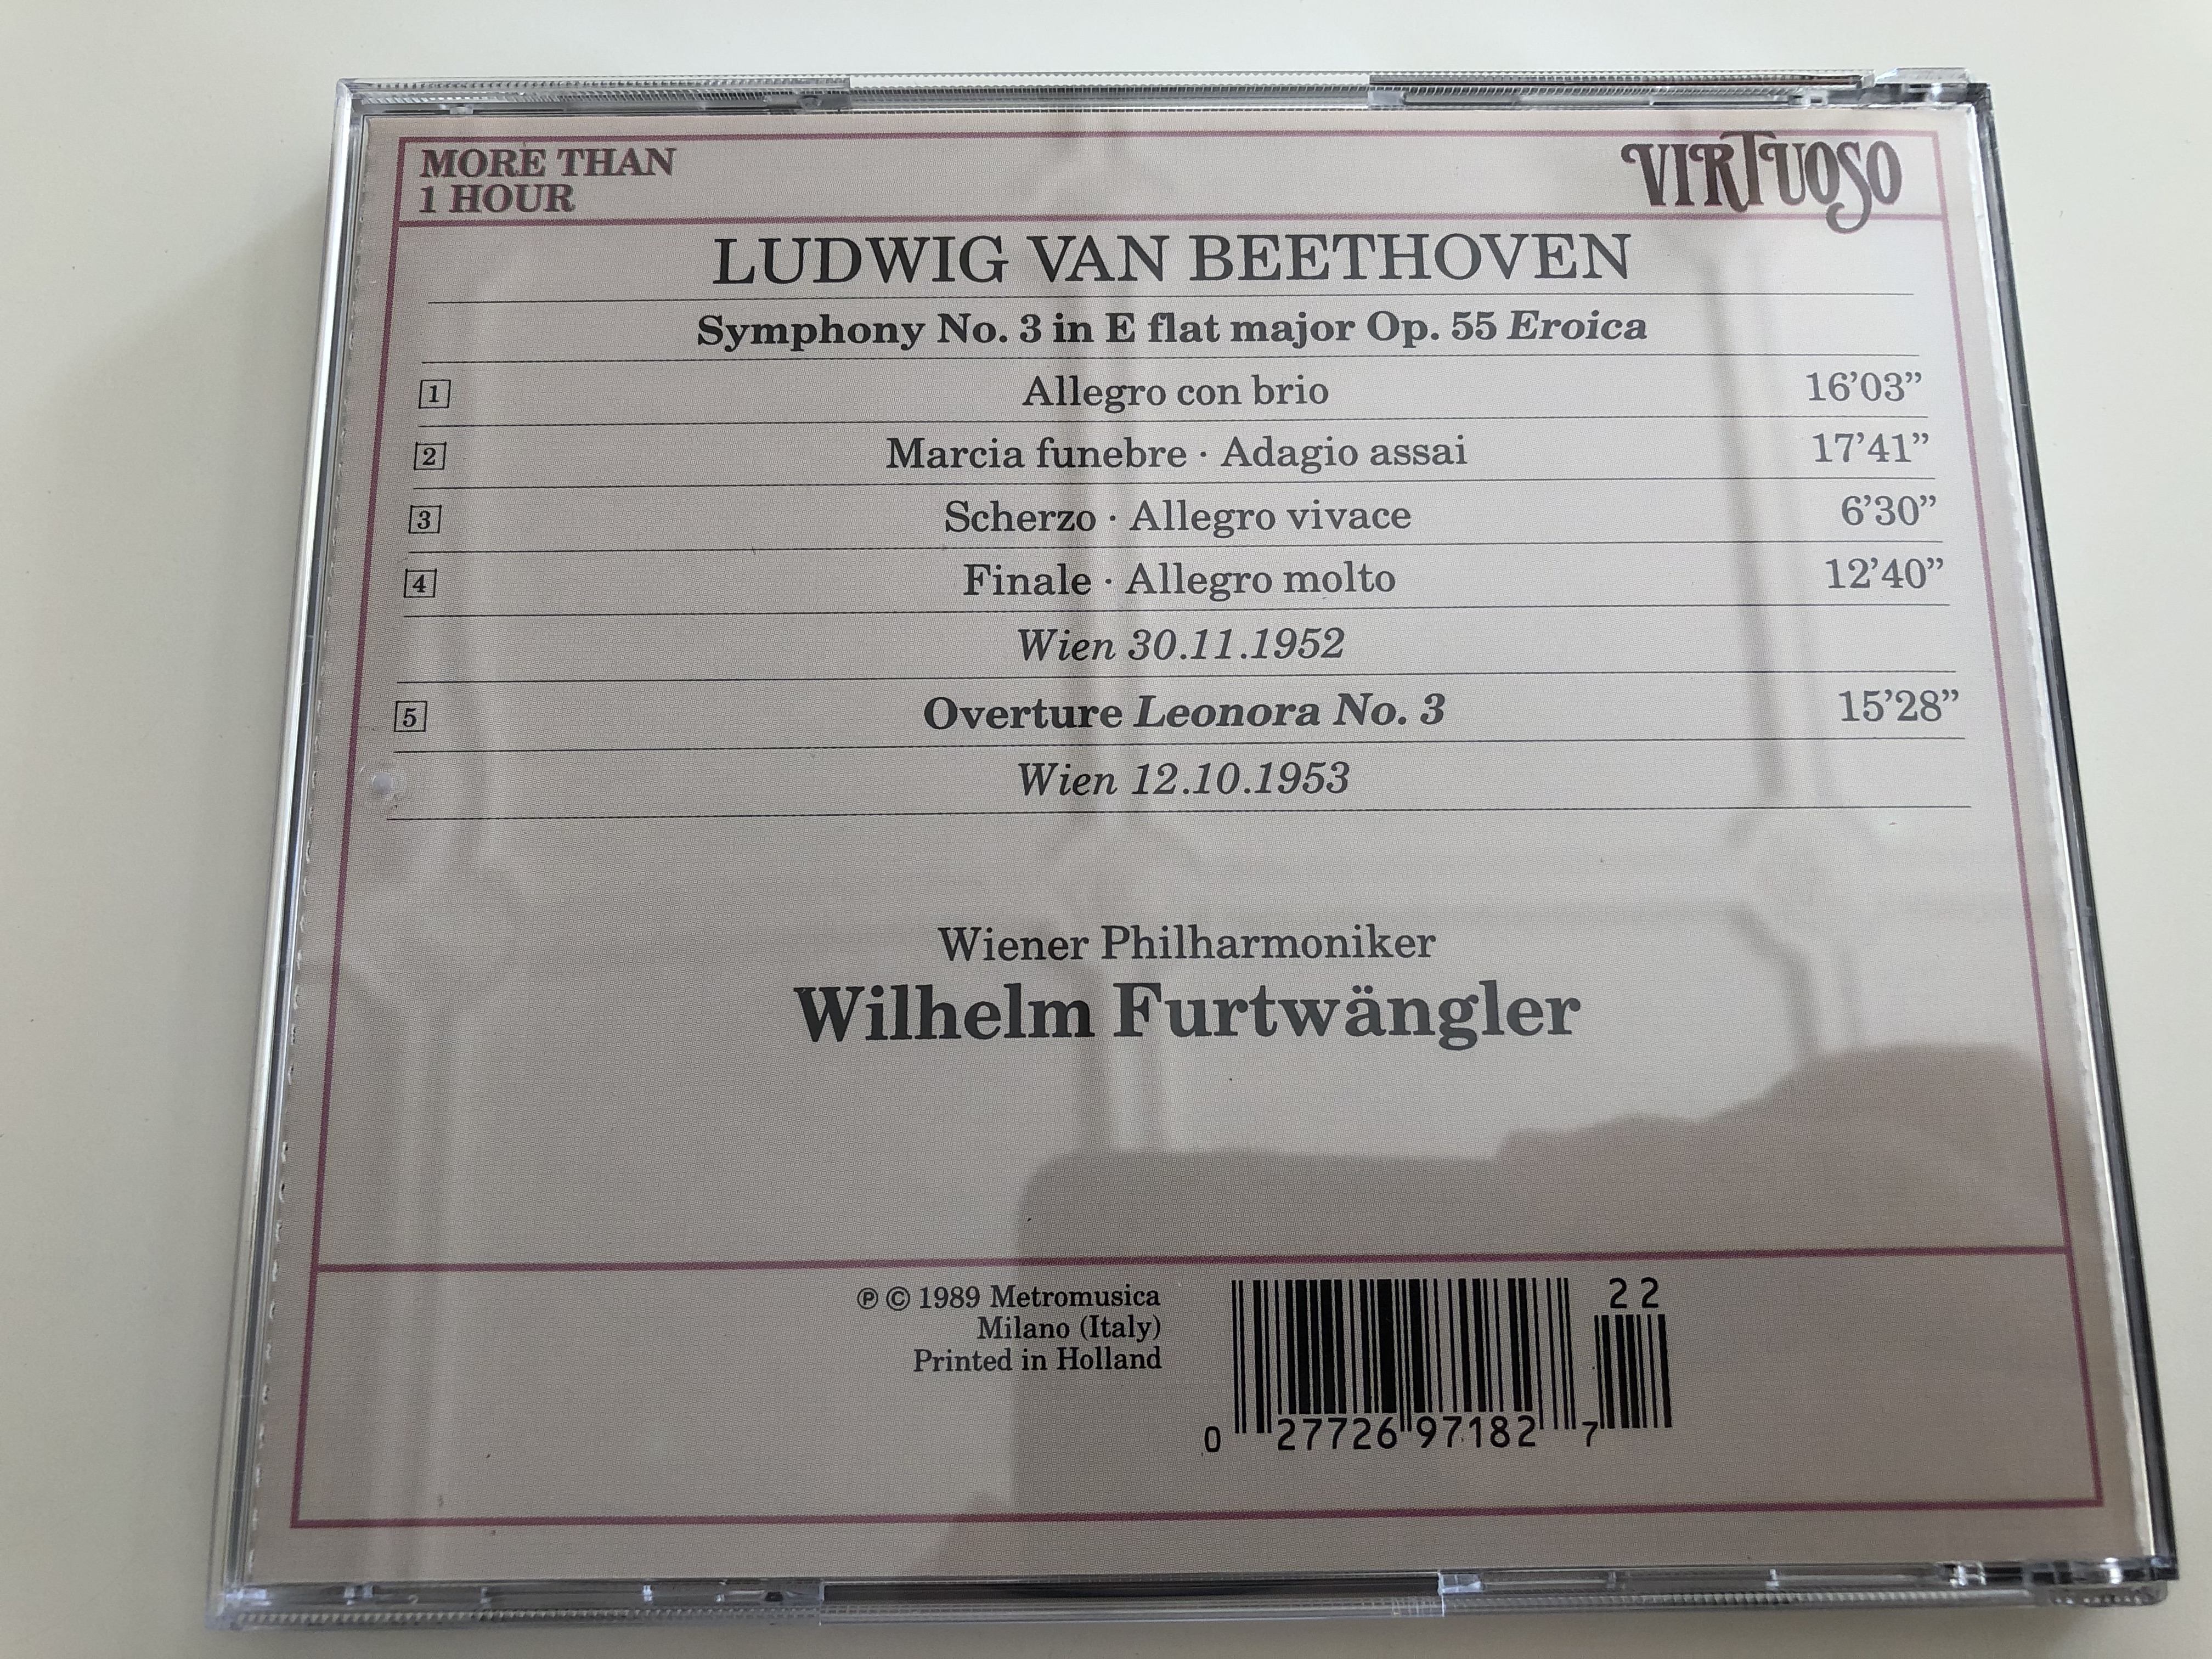 beethoven-symphony-no.-3-overture-leonora-no.-3-wiener-philharmoniker-conducted-by-wilhelm-furtw-ngler-virtuoso-audio-cd-1989-4-.jpg